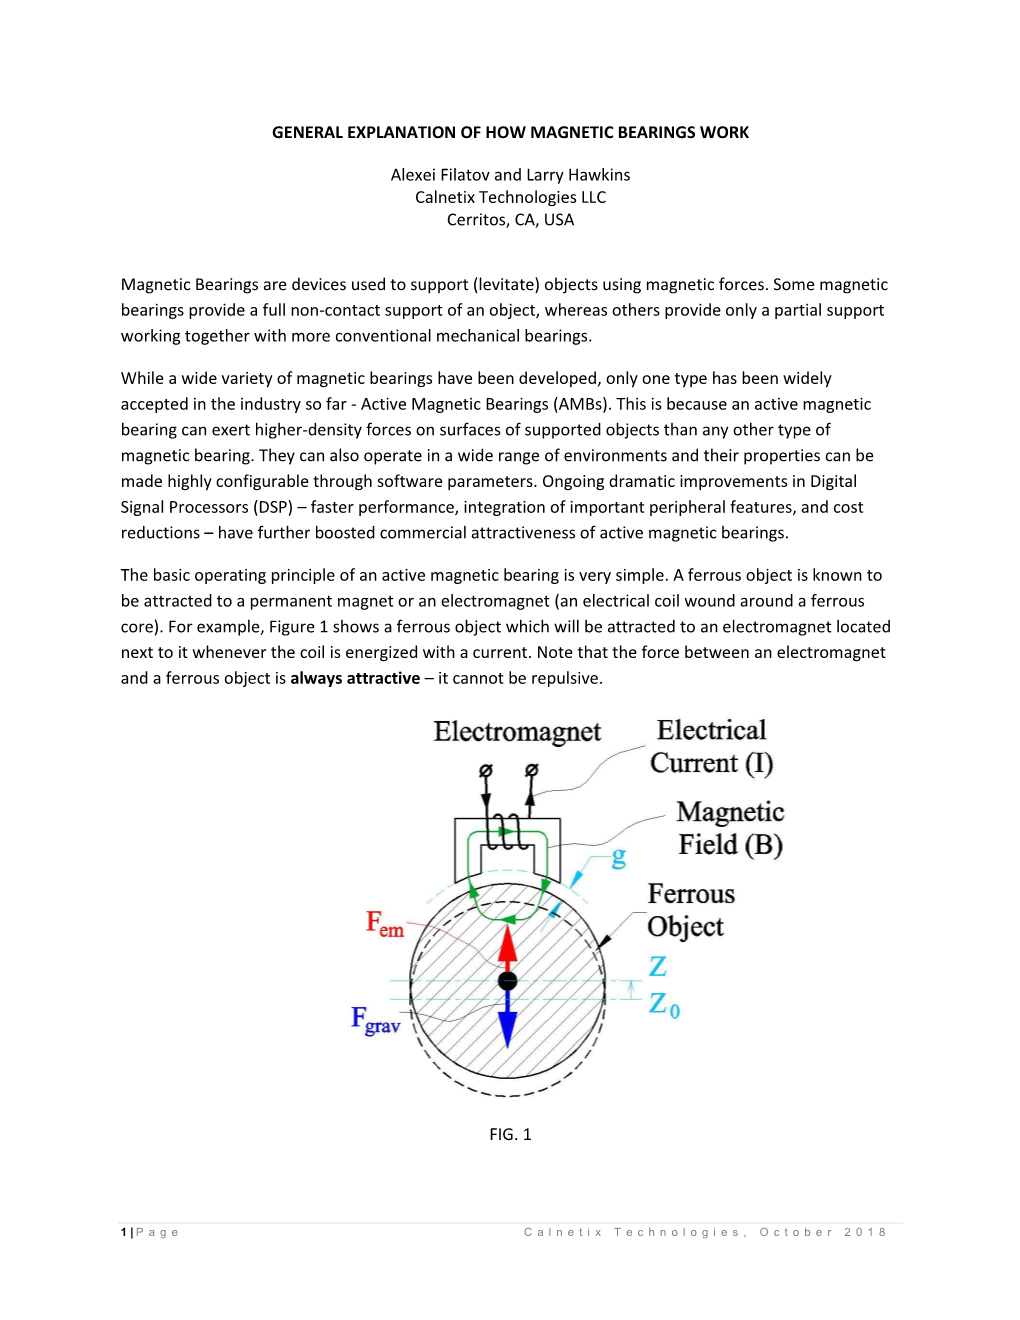 General Explanation of How Magnetic Bearings Work